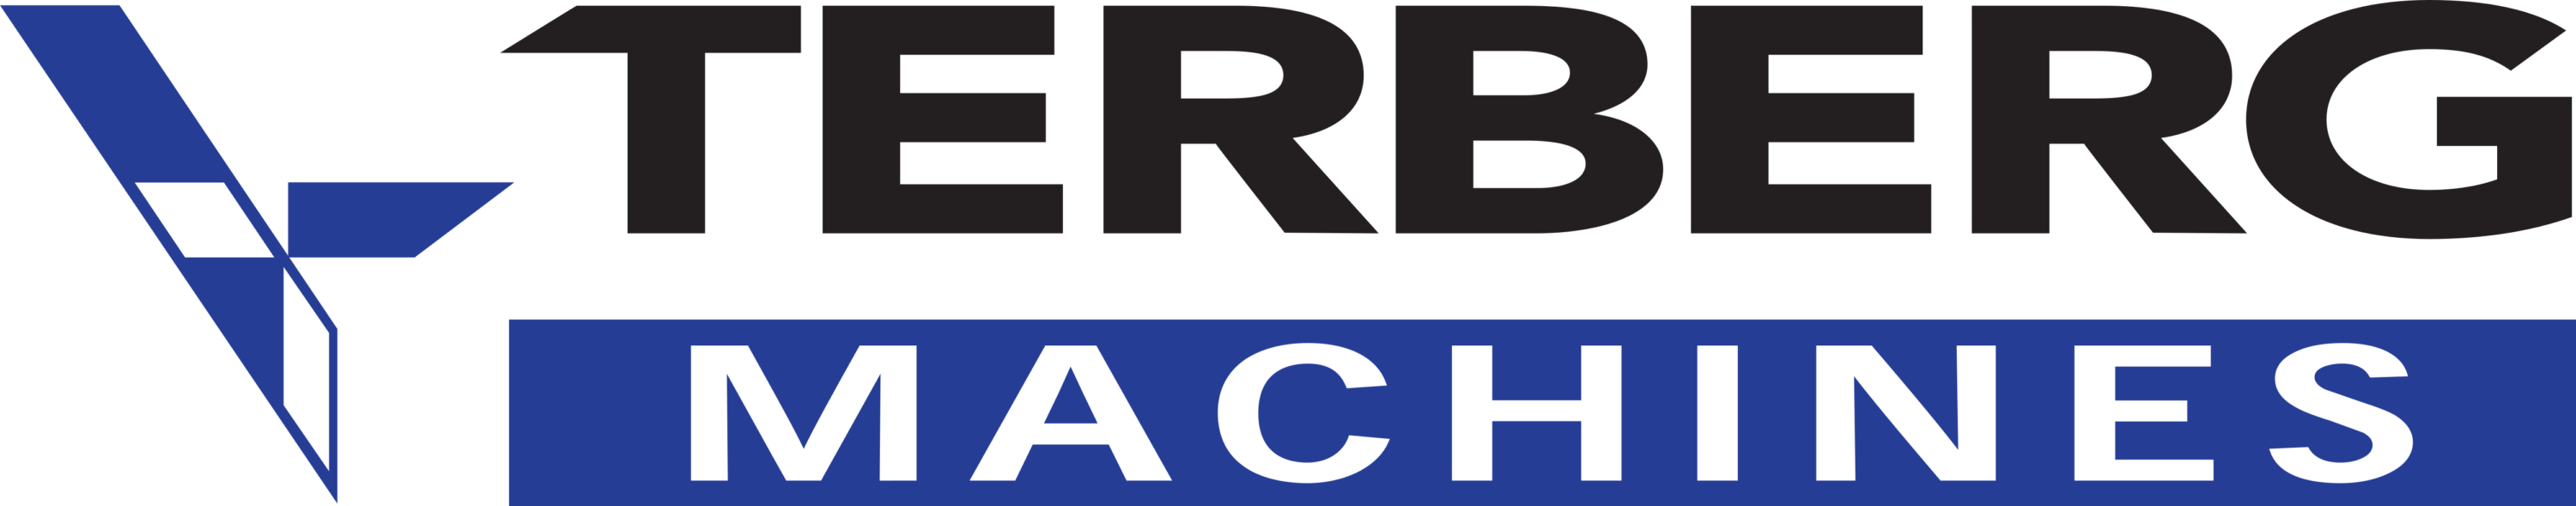 Terberg Group Logo